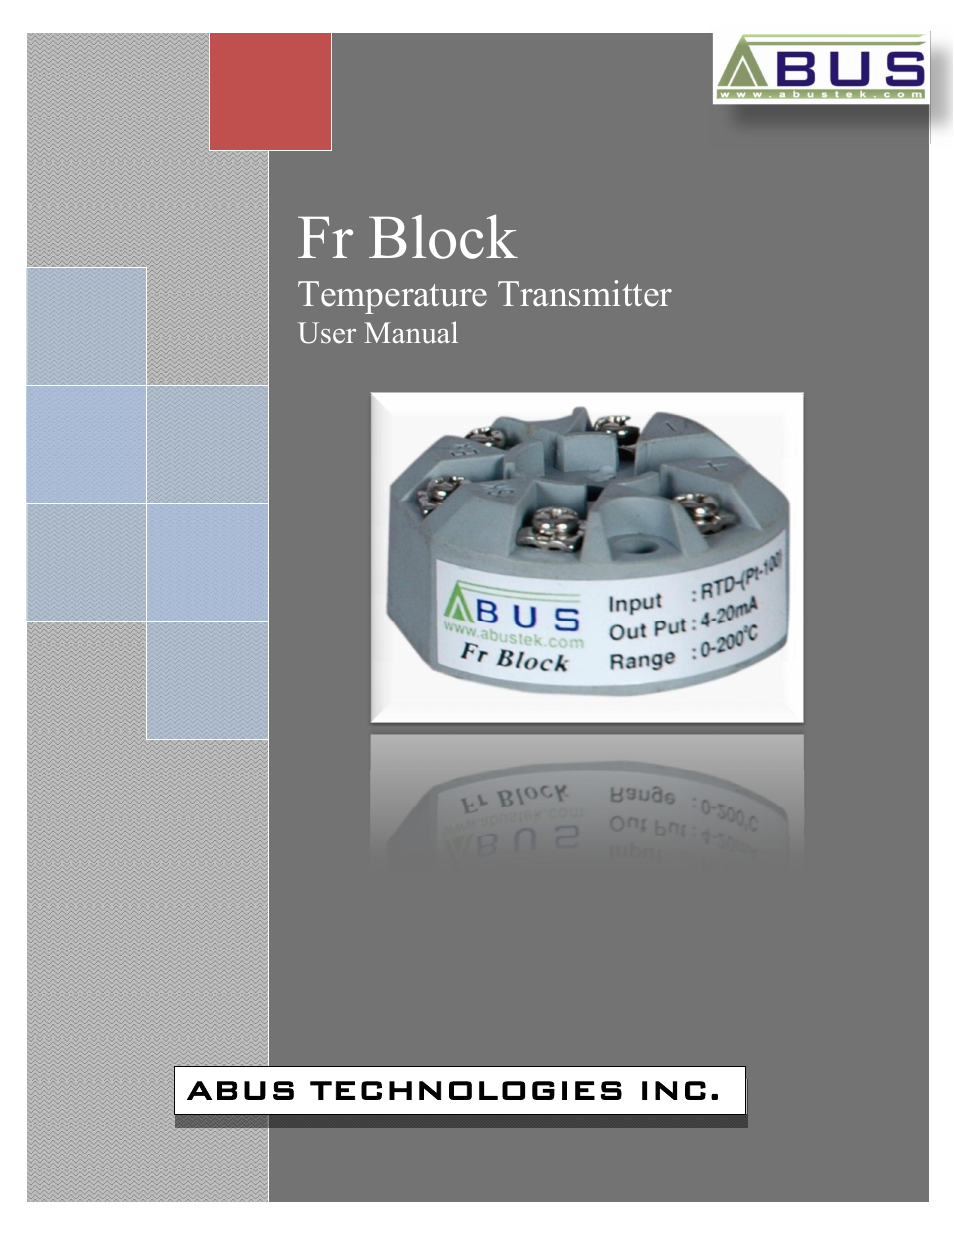 Fr Block Temperature Transmitter